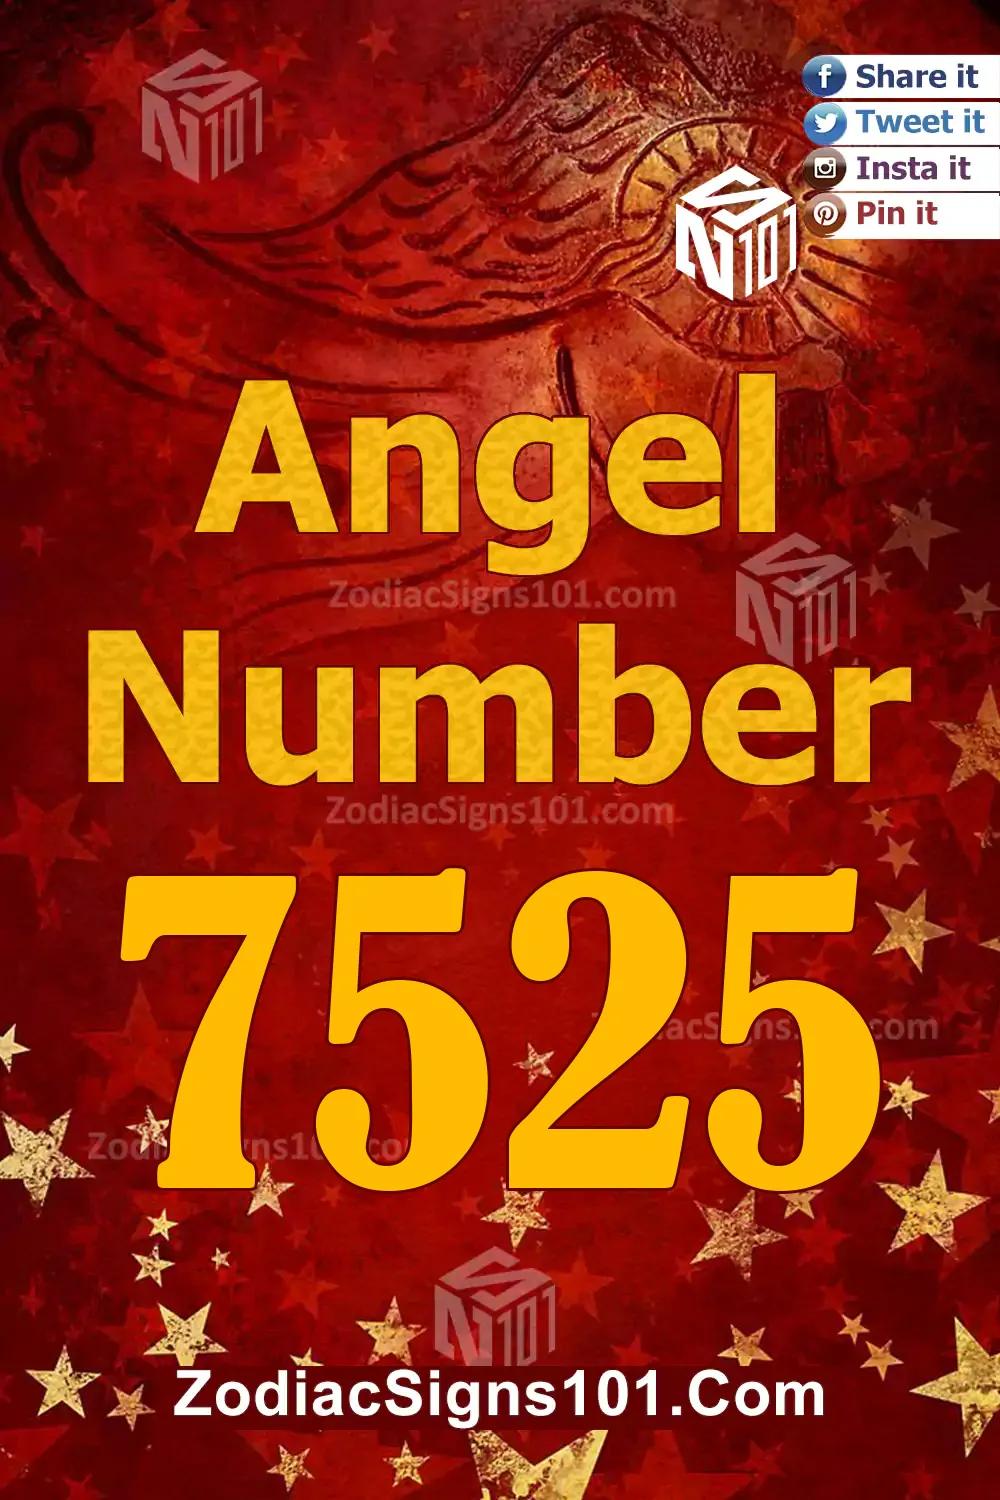 7525-Angel-Number-Meaning.jpg